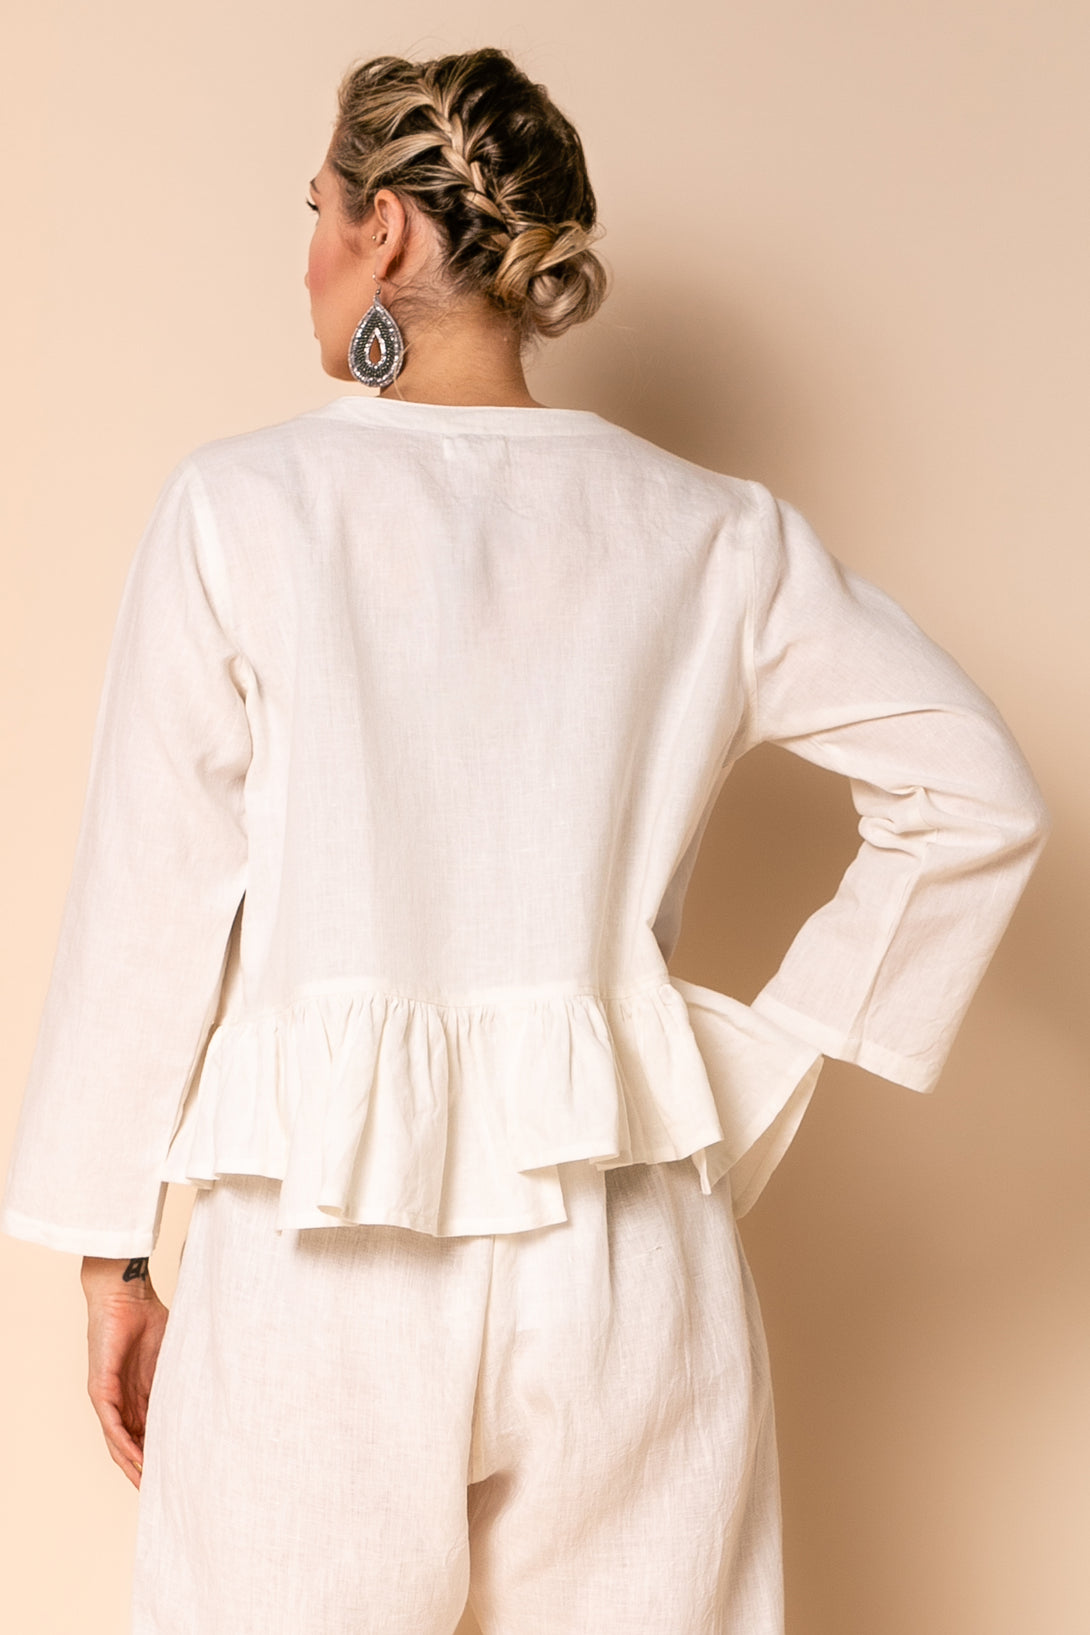 Romy Linen Blend Top in Cream - Imagine Fashion